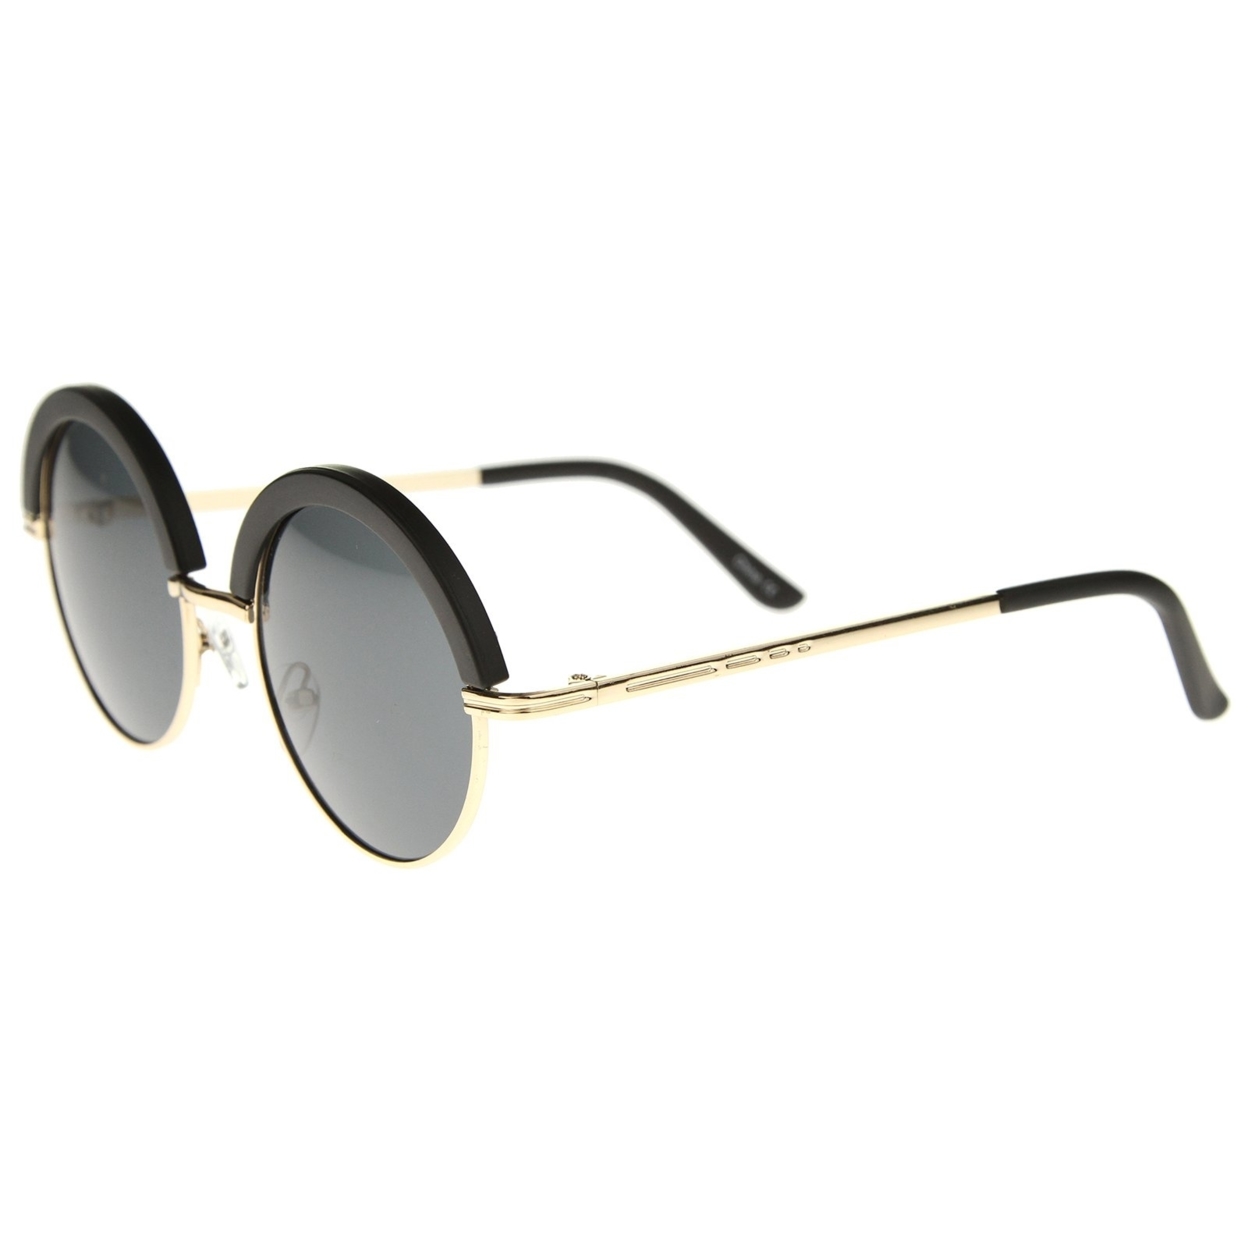 Mod Fashion Oversize Half-Frame Brow Eyelid Round Sunglasses 50mm - Matte Black-Gold / Smoke